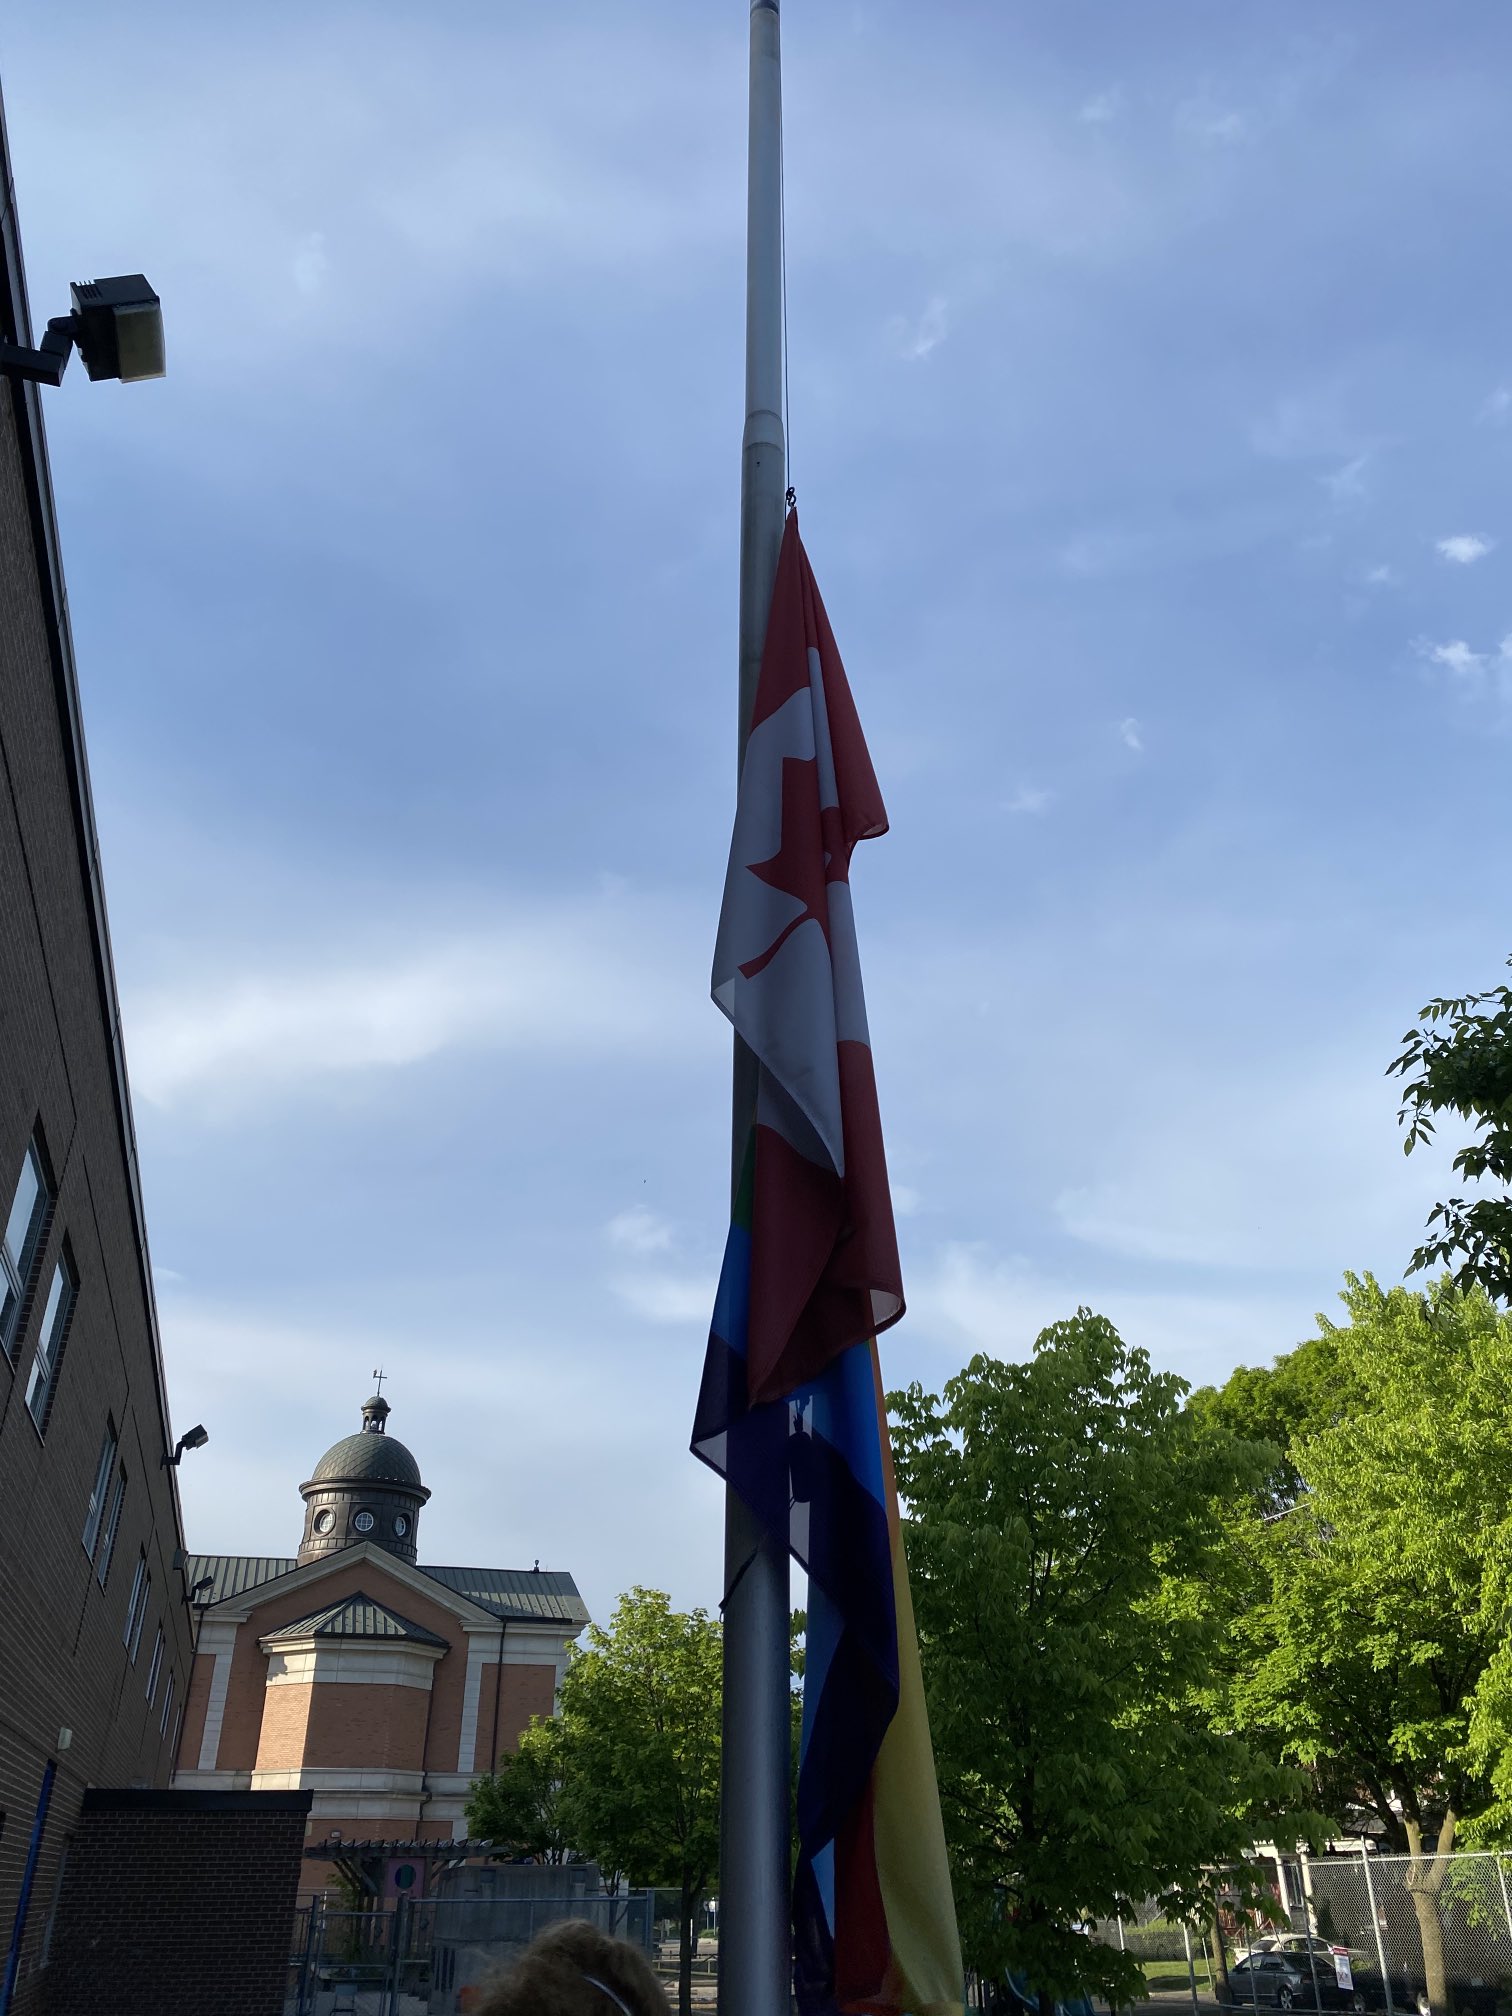 Holy Family Catholic School Pride Flag on Pole with Canadian Flag.